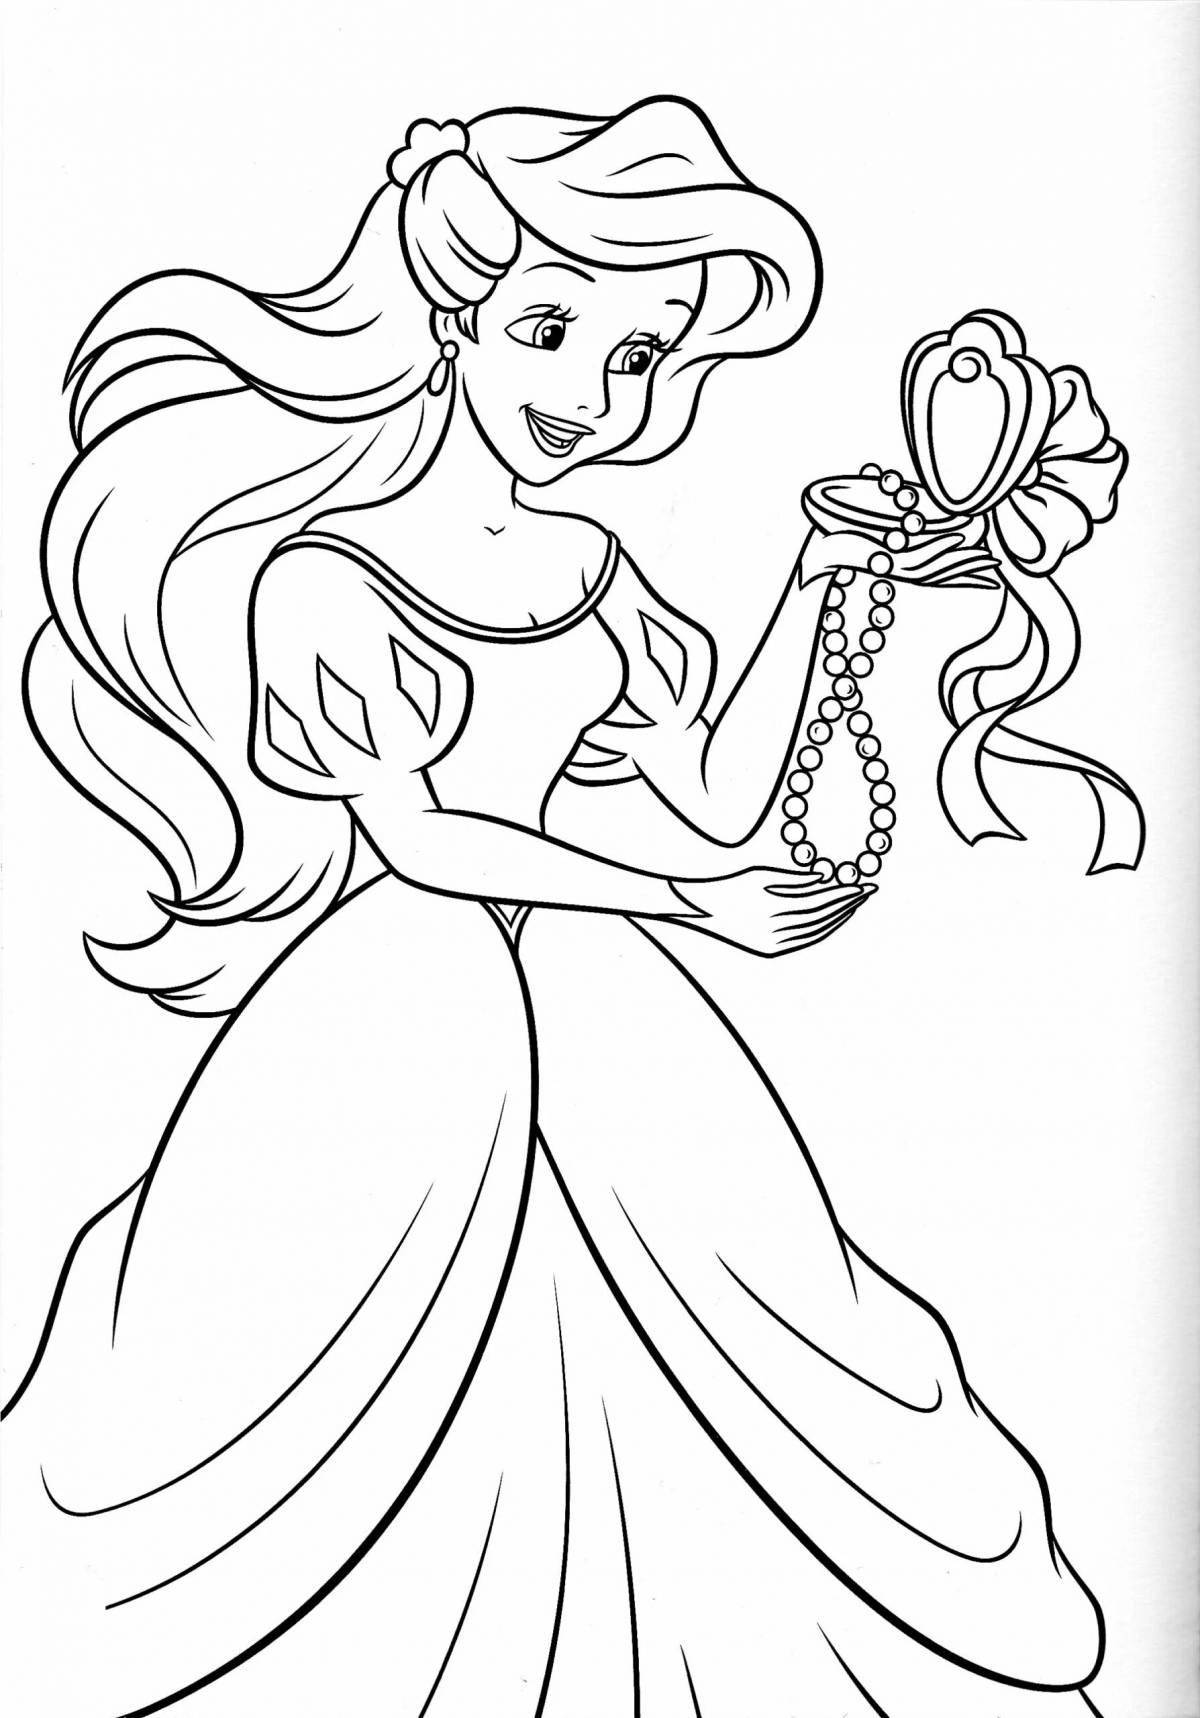 Elegant coloring book for kids with disney princesses